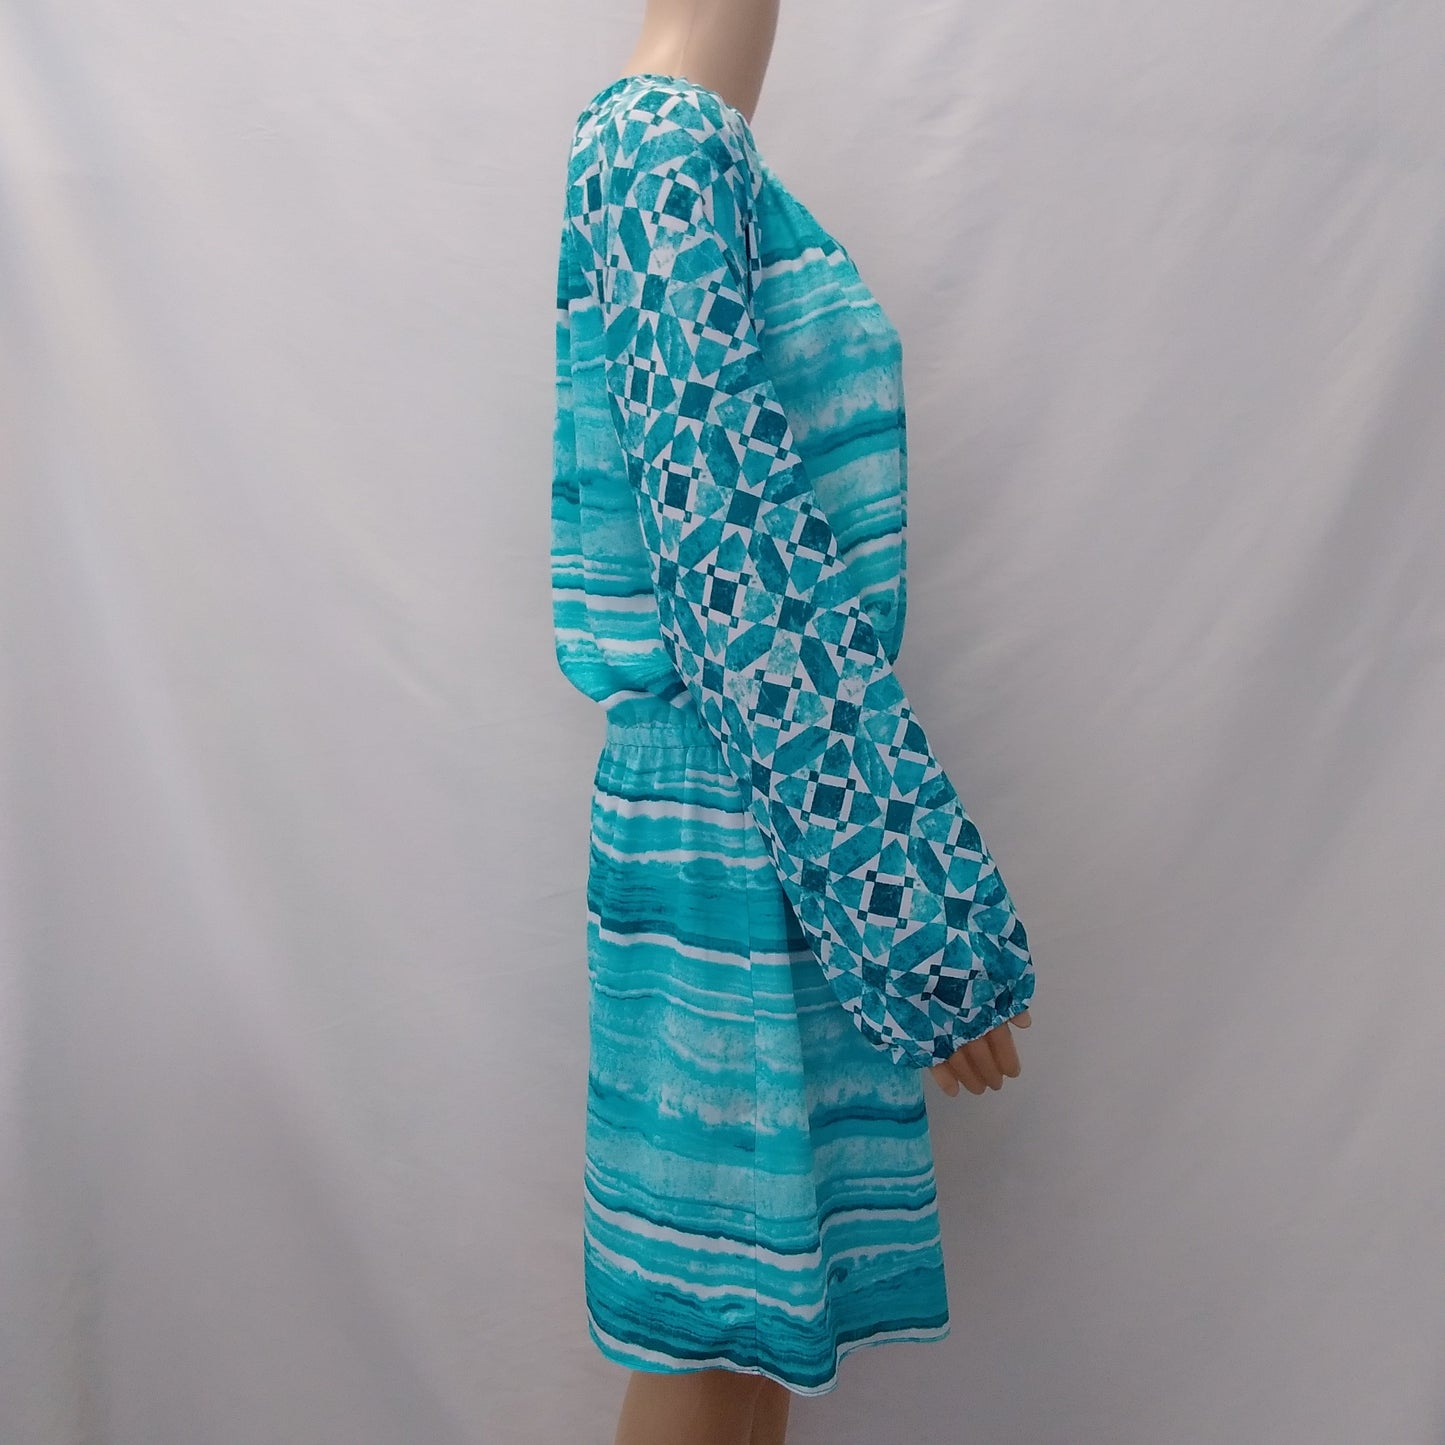 NWT - Michael Kors turquoise Geometric Long-sleeve Dress - 10